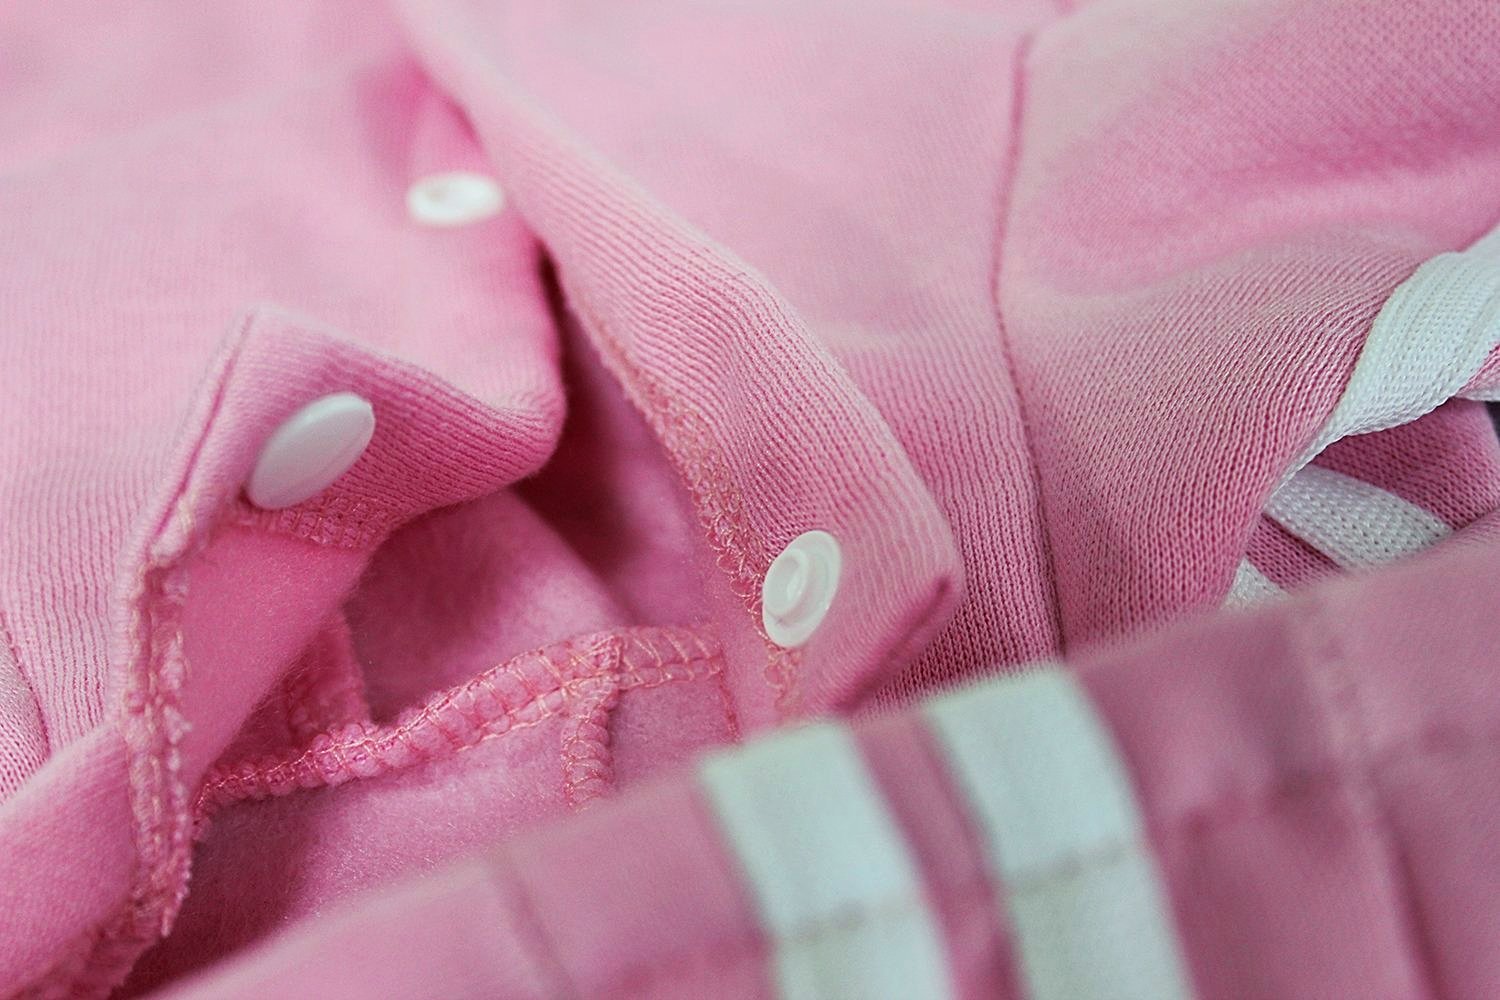 adidog hoodie pink